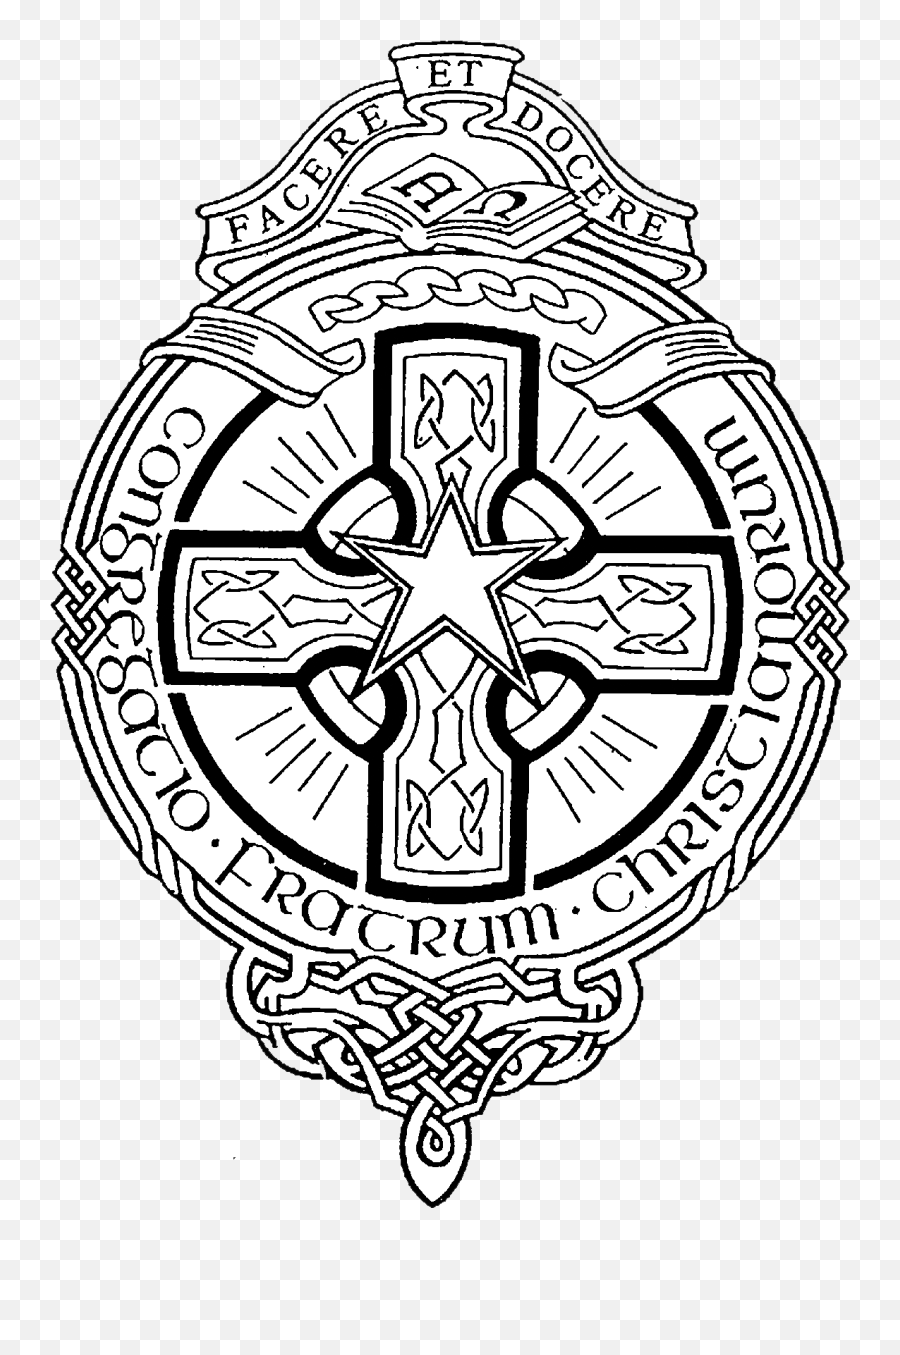 Mission Statement - Cbs Kilkenny Crest Png,Edmund Rice Icon